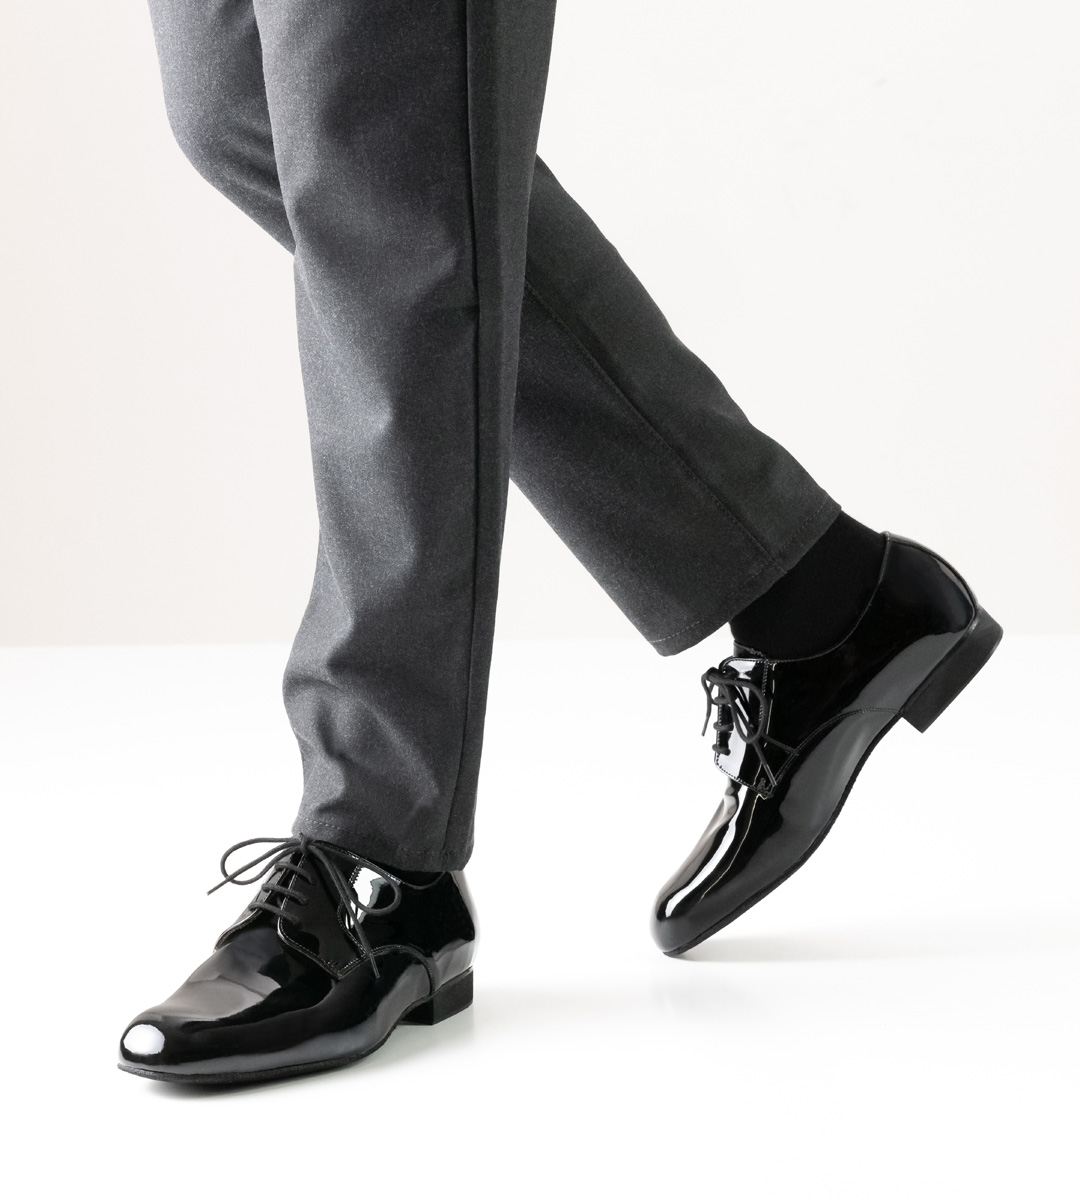 Standard men's dance shoe from Werner Kern in patent for wide feet